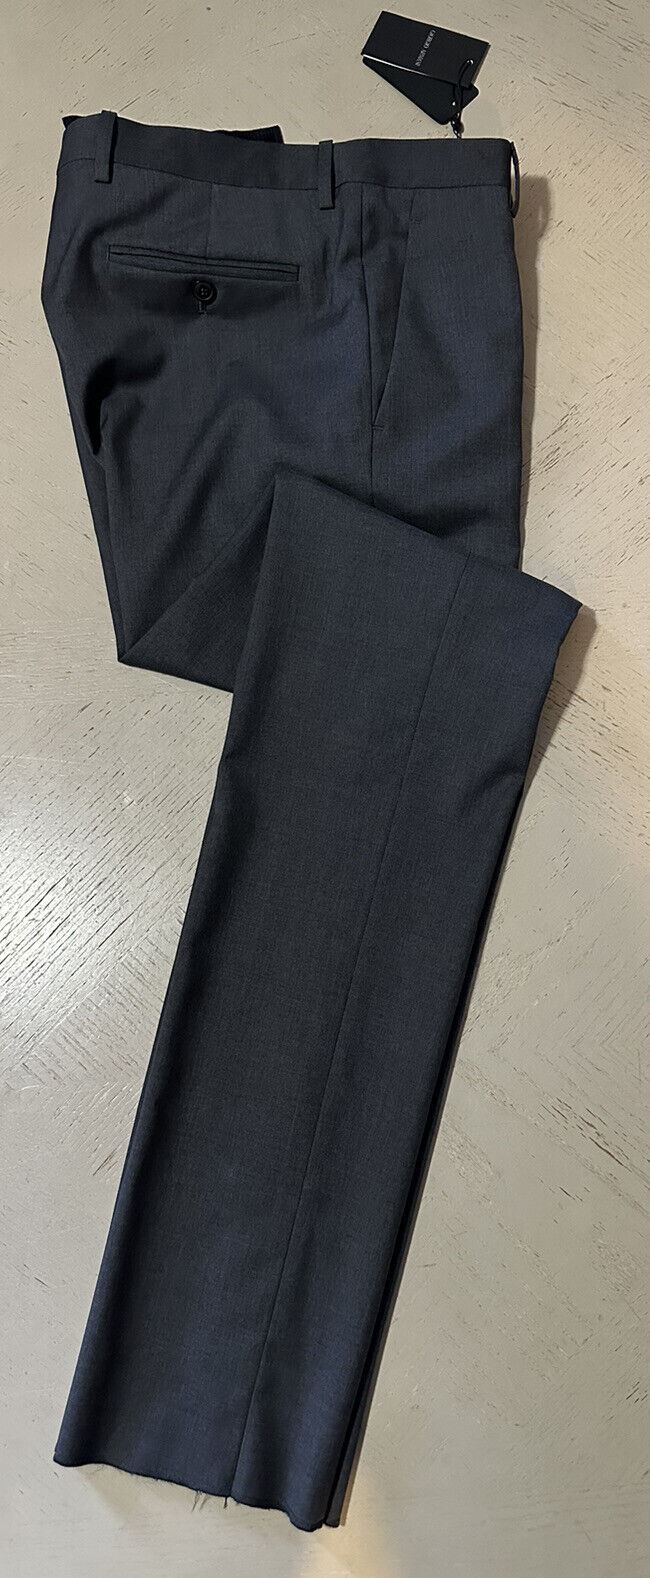 NWT $825 Giorgio Armani Mens Dress Pants DK Gray 34 US/50 Eu Italy